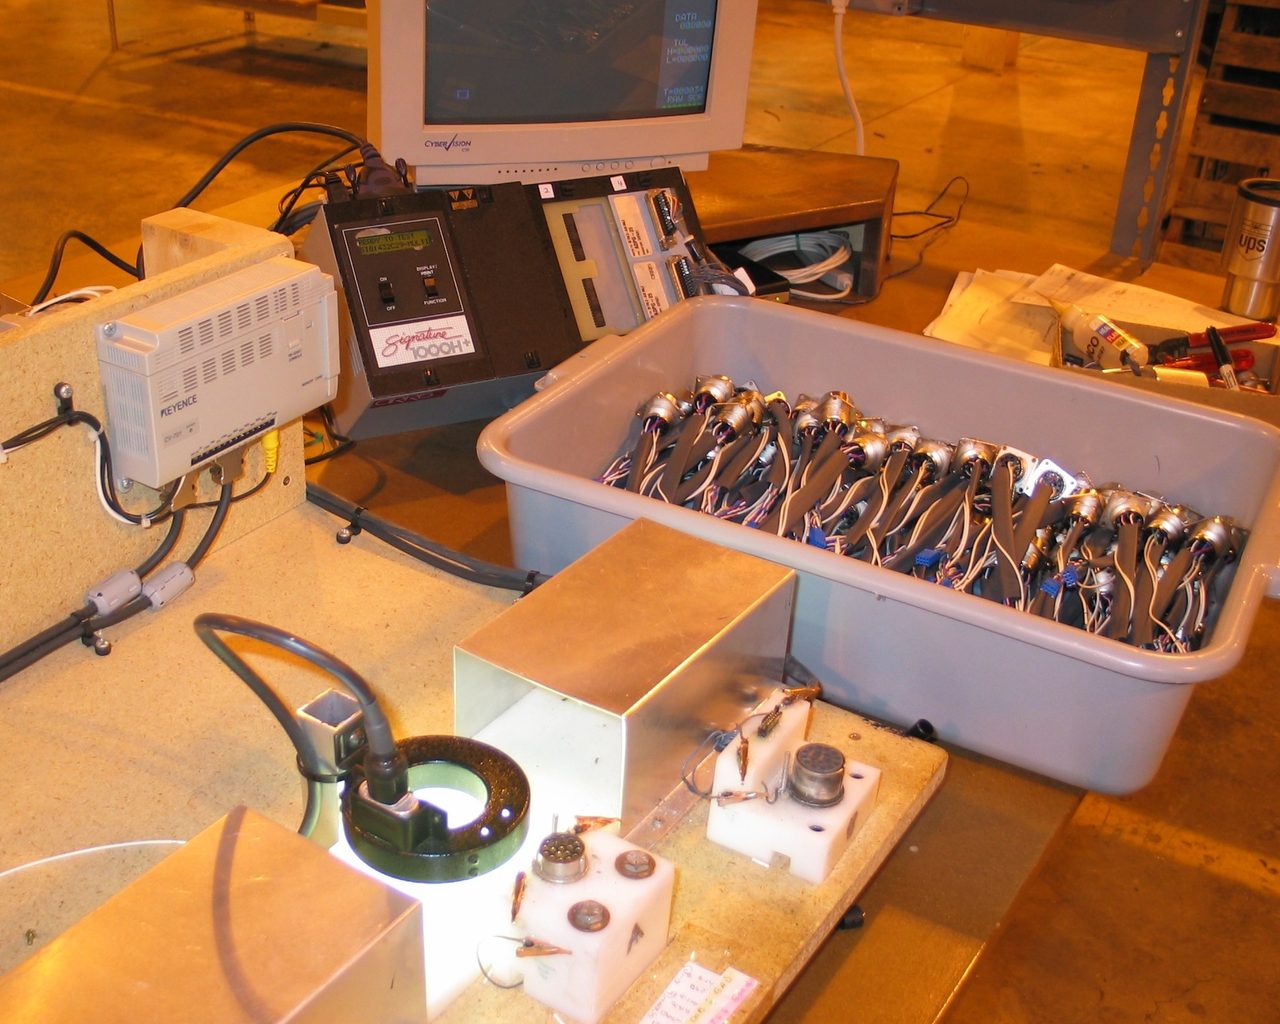 Audio equipment, Table, Eyewear